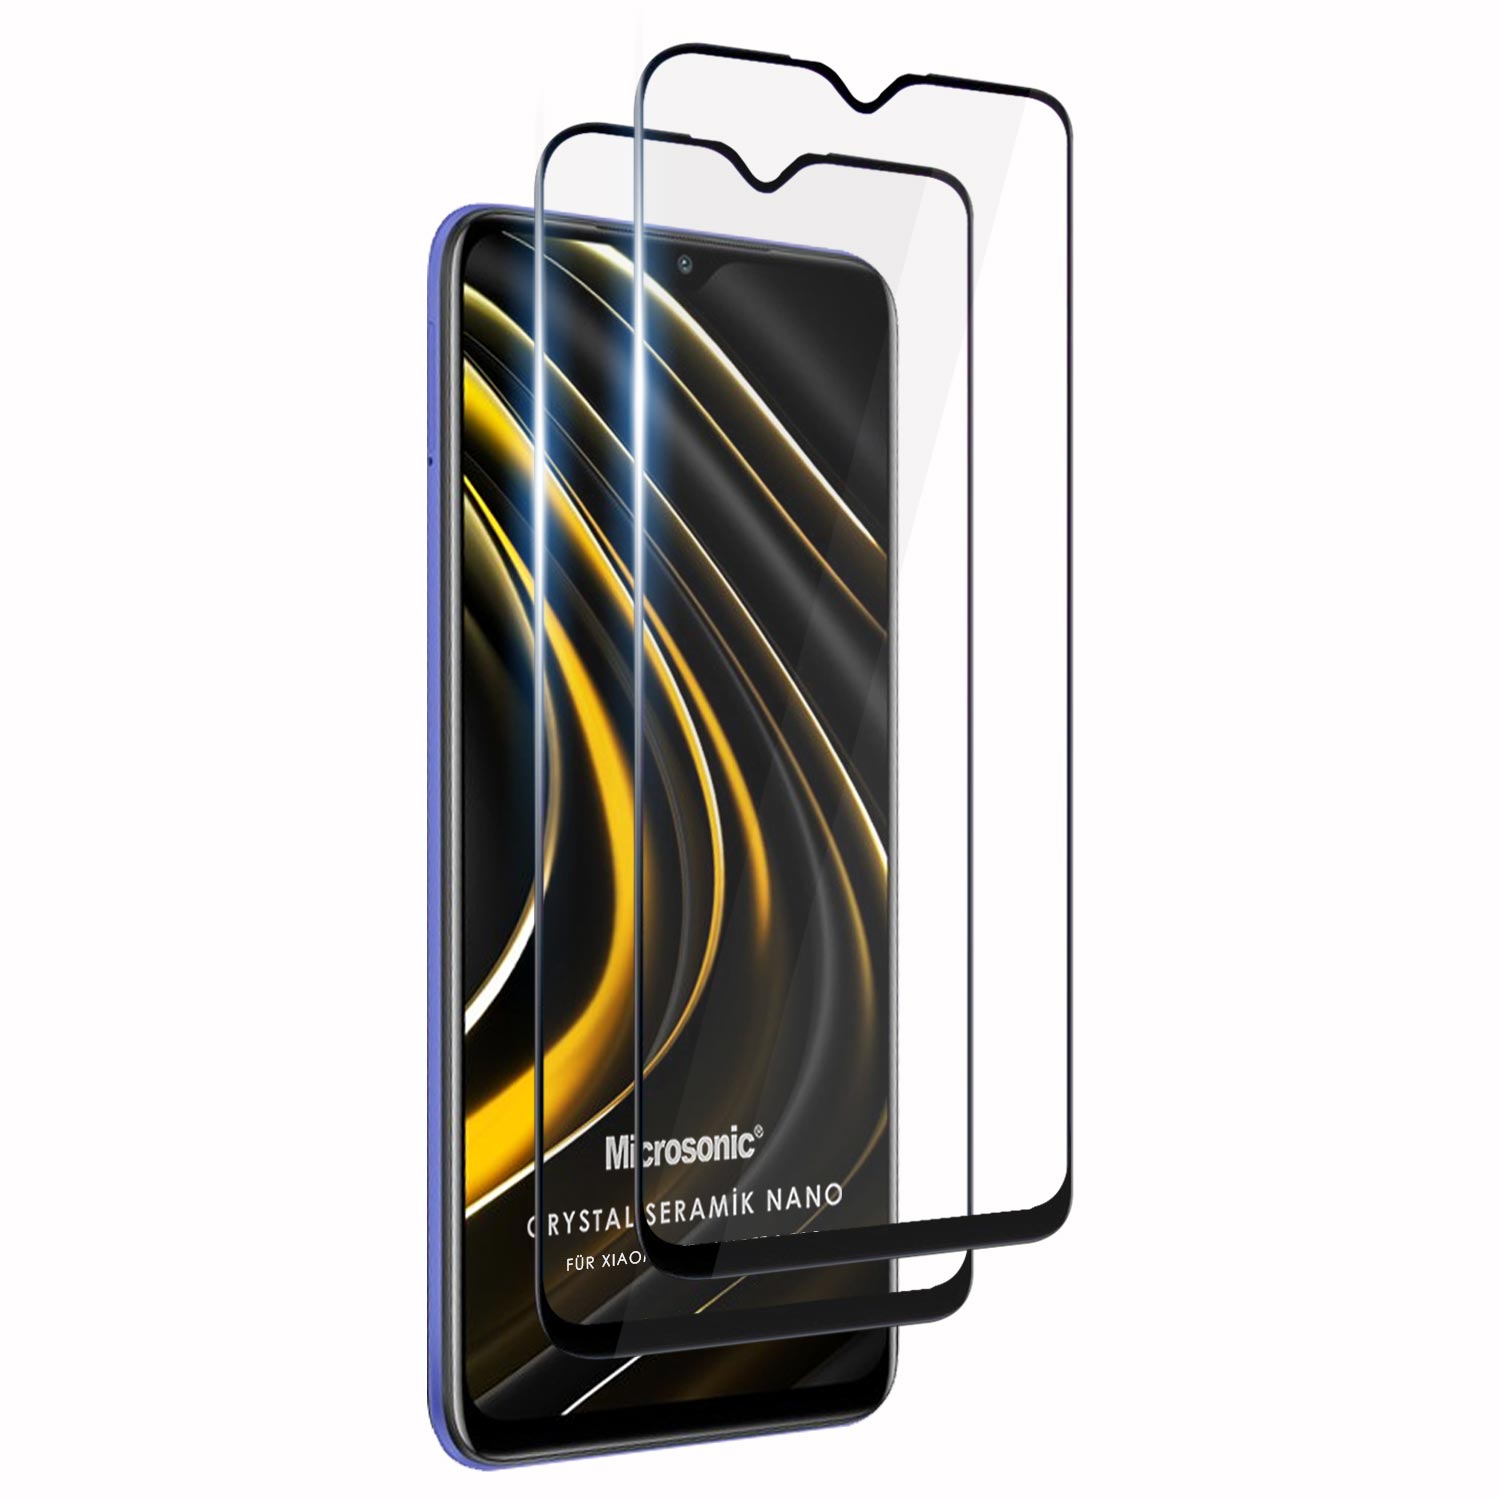 Microsonic Xiaomi Redmi Note 9 4G Crystal Seramik Nano Ekran Koruyucu Siyah 2 Adet